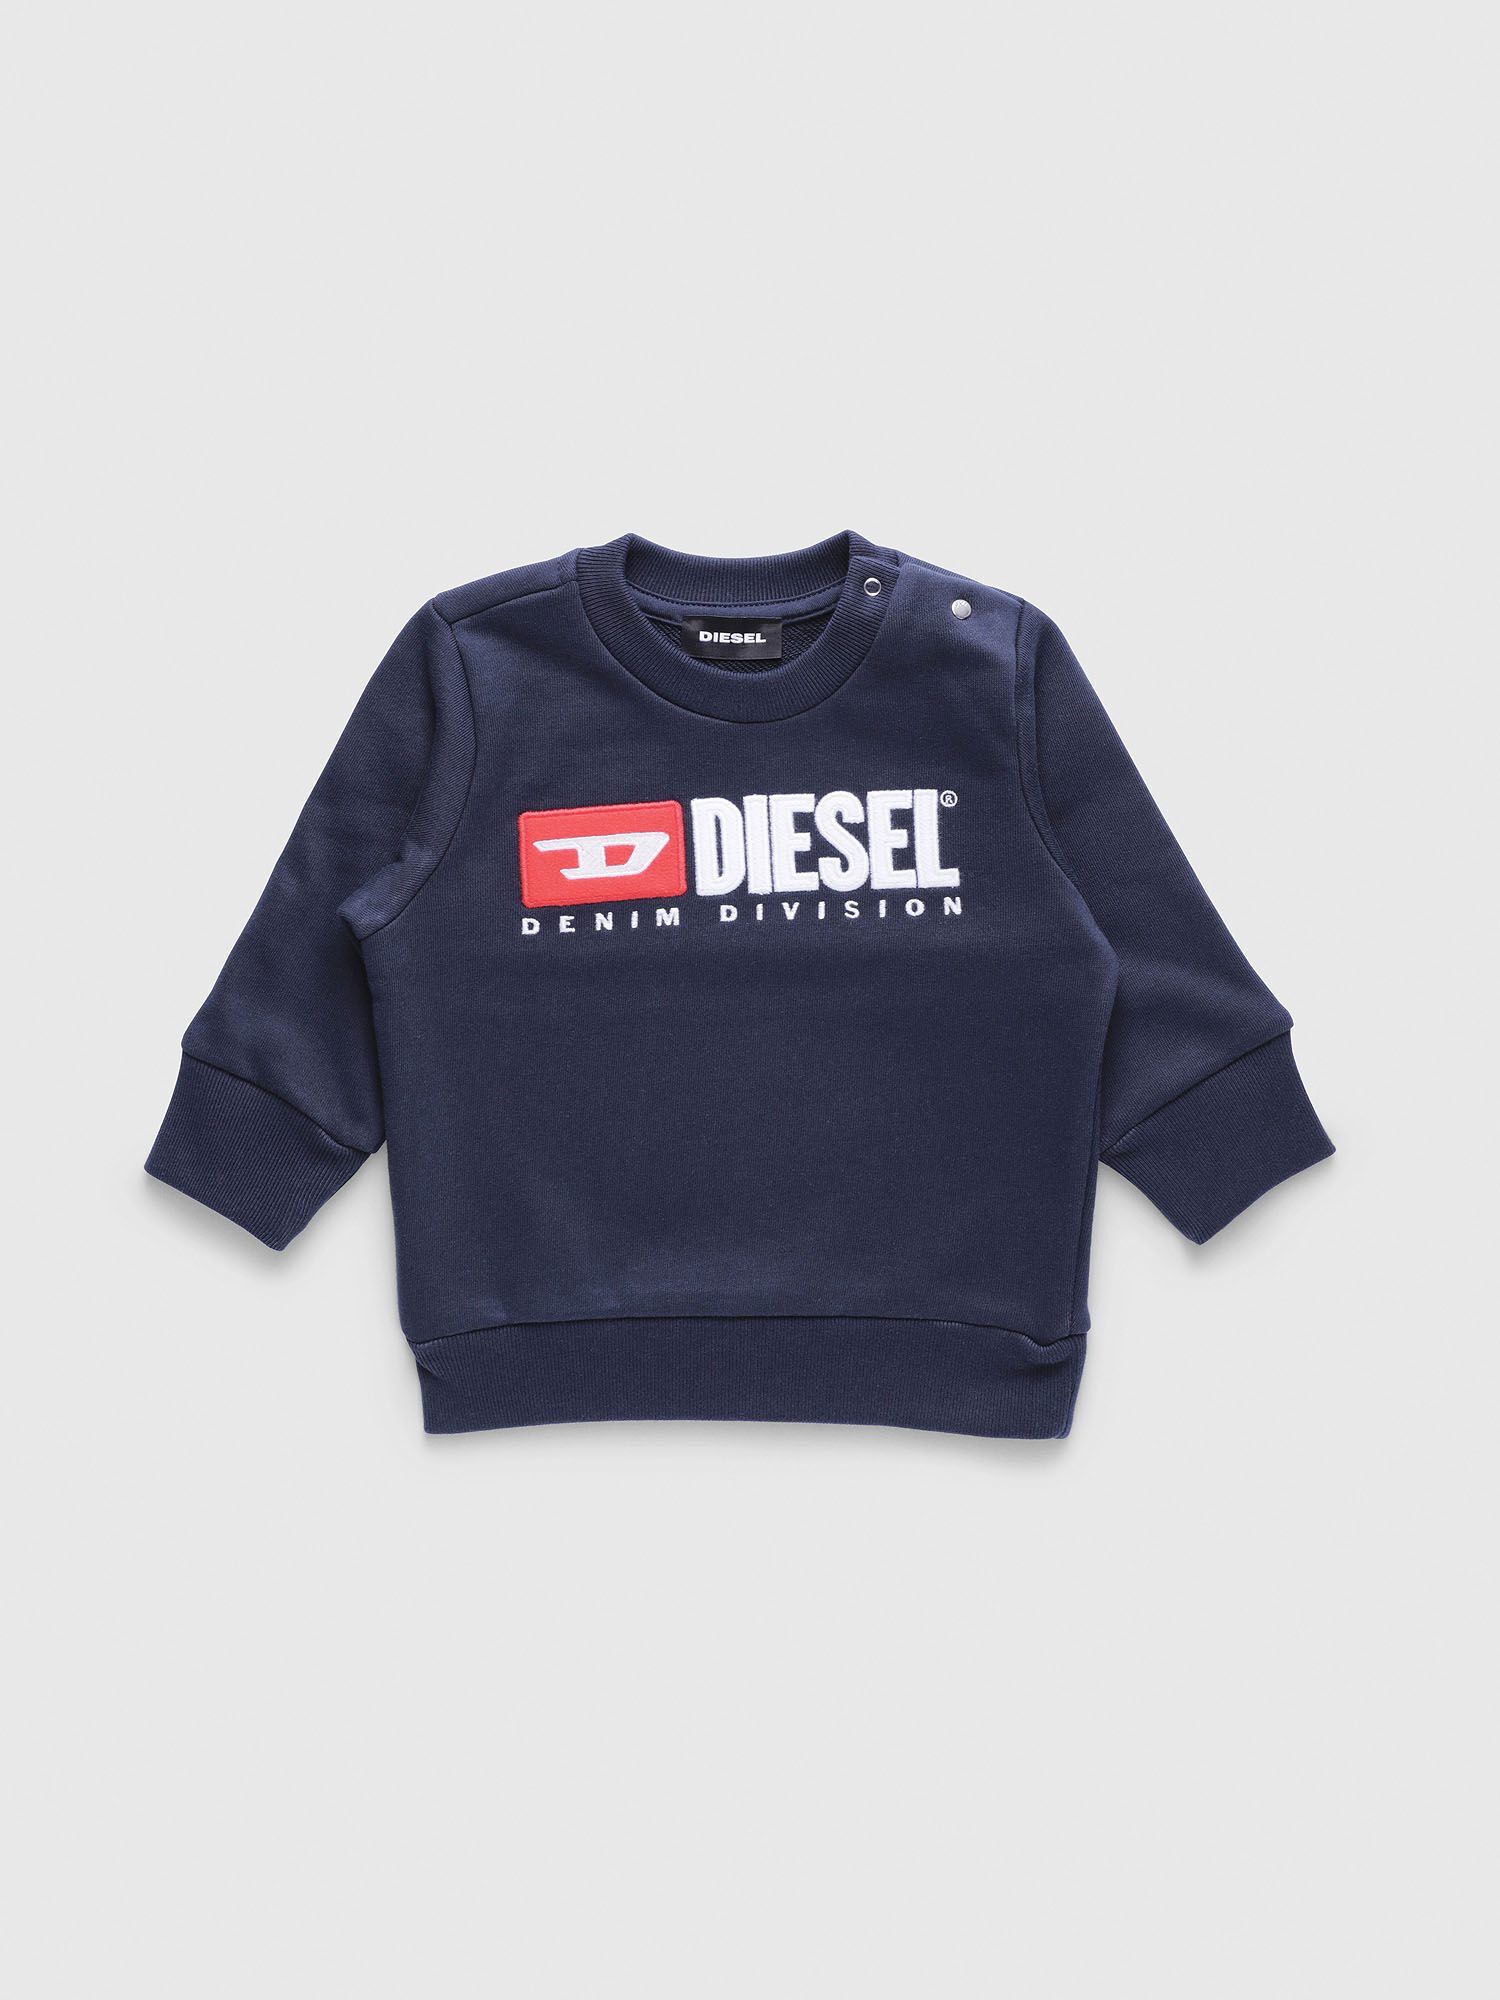 Boys Diesel T Shirt short sleeves dark charcoal various Sizes ...